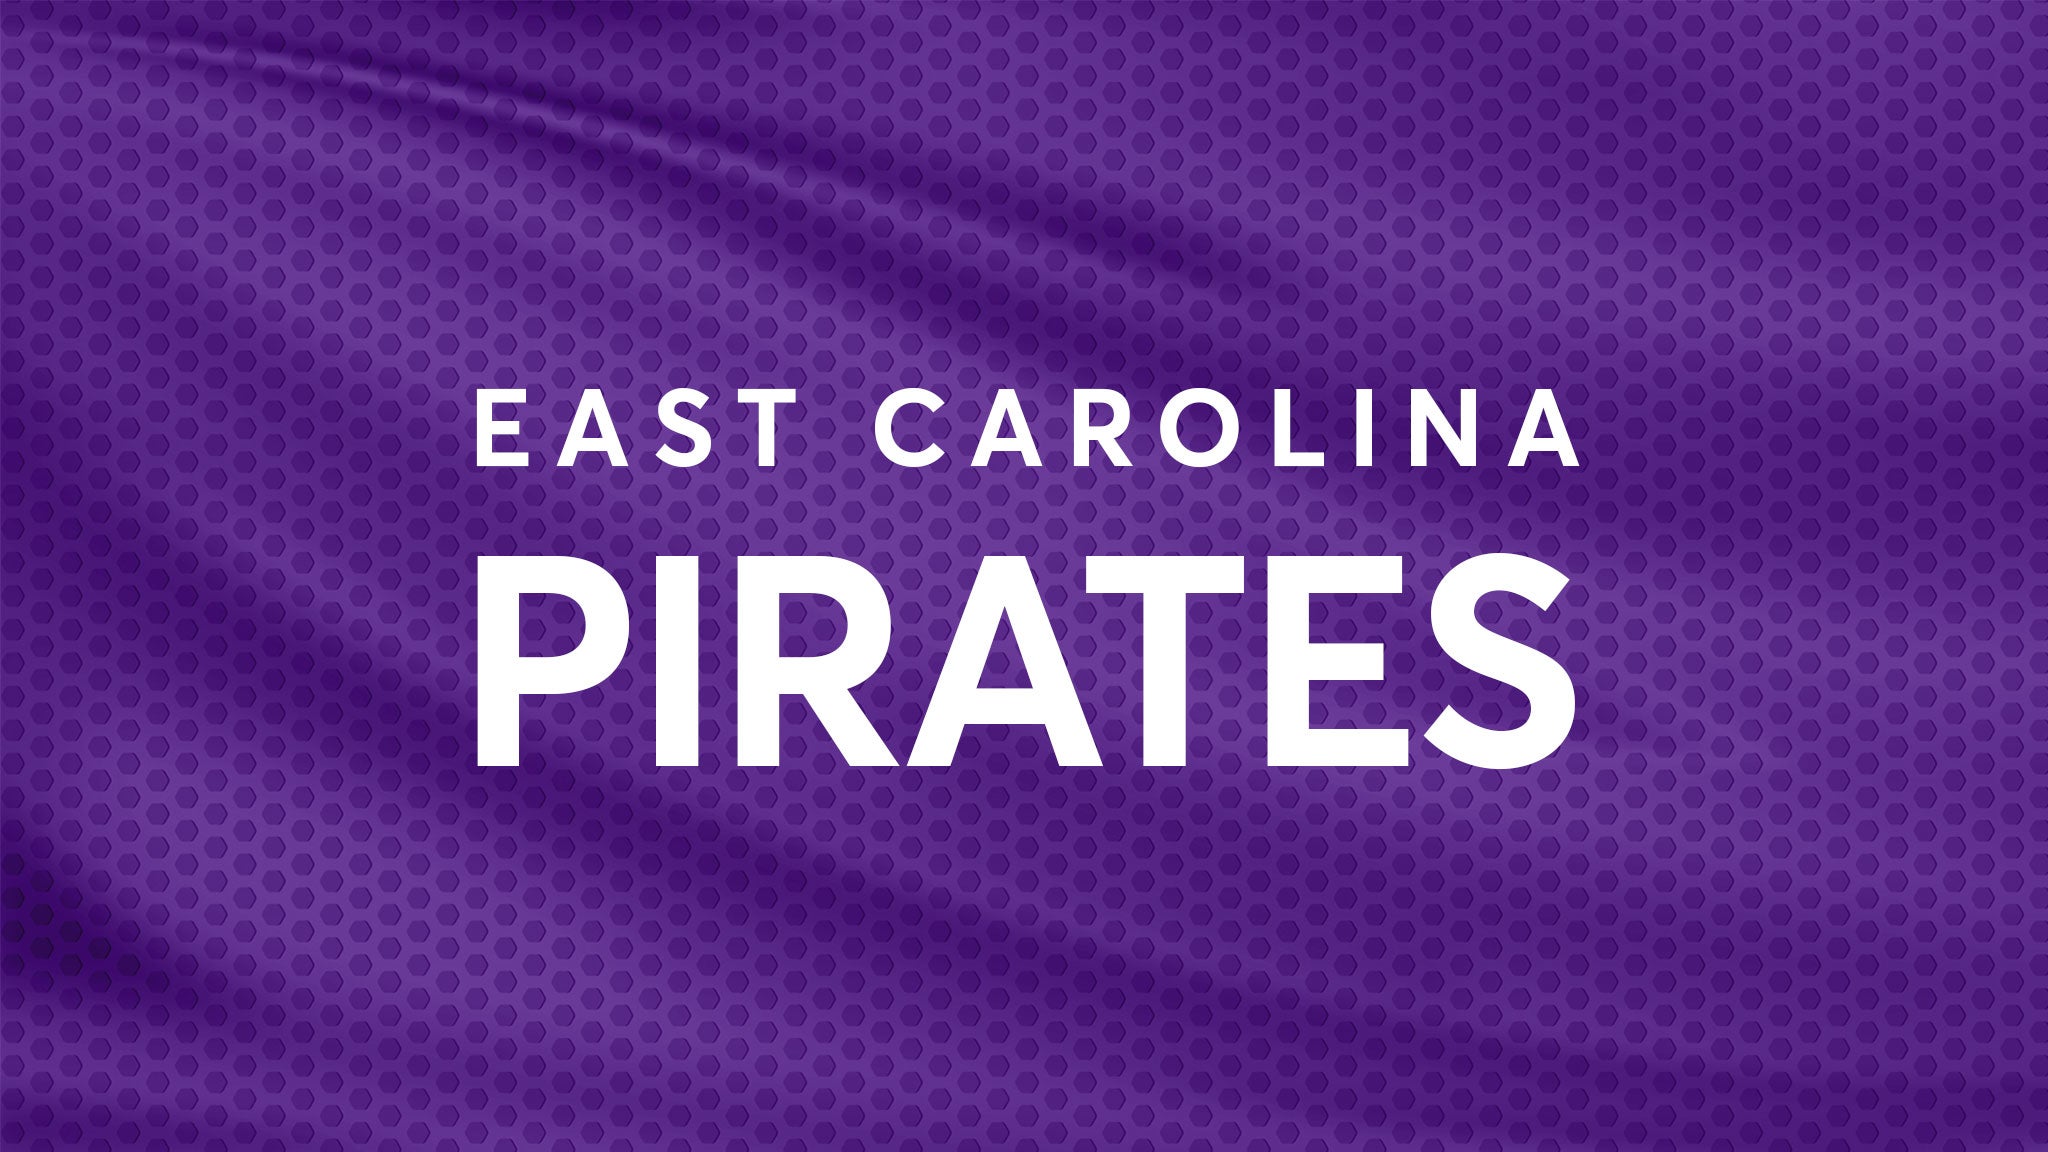 East Carolina Pirates Football vs. Navy Midshipmen Football